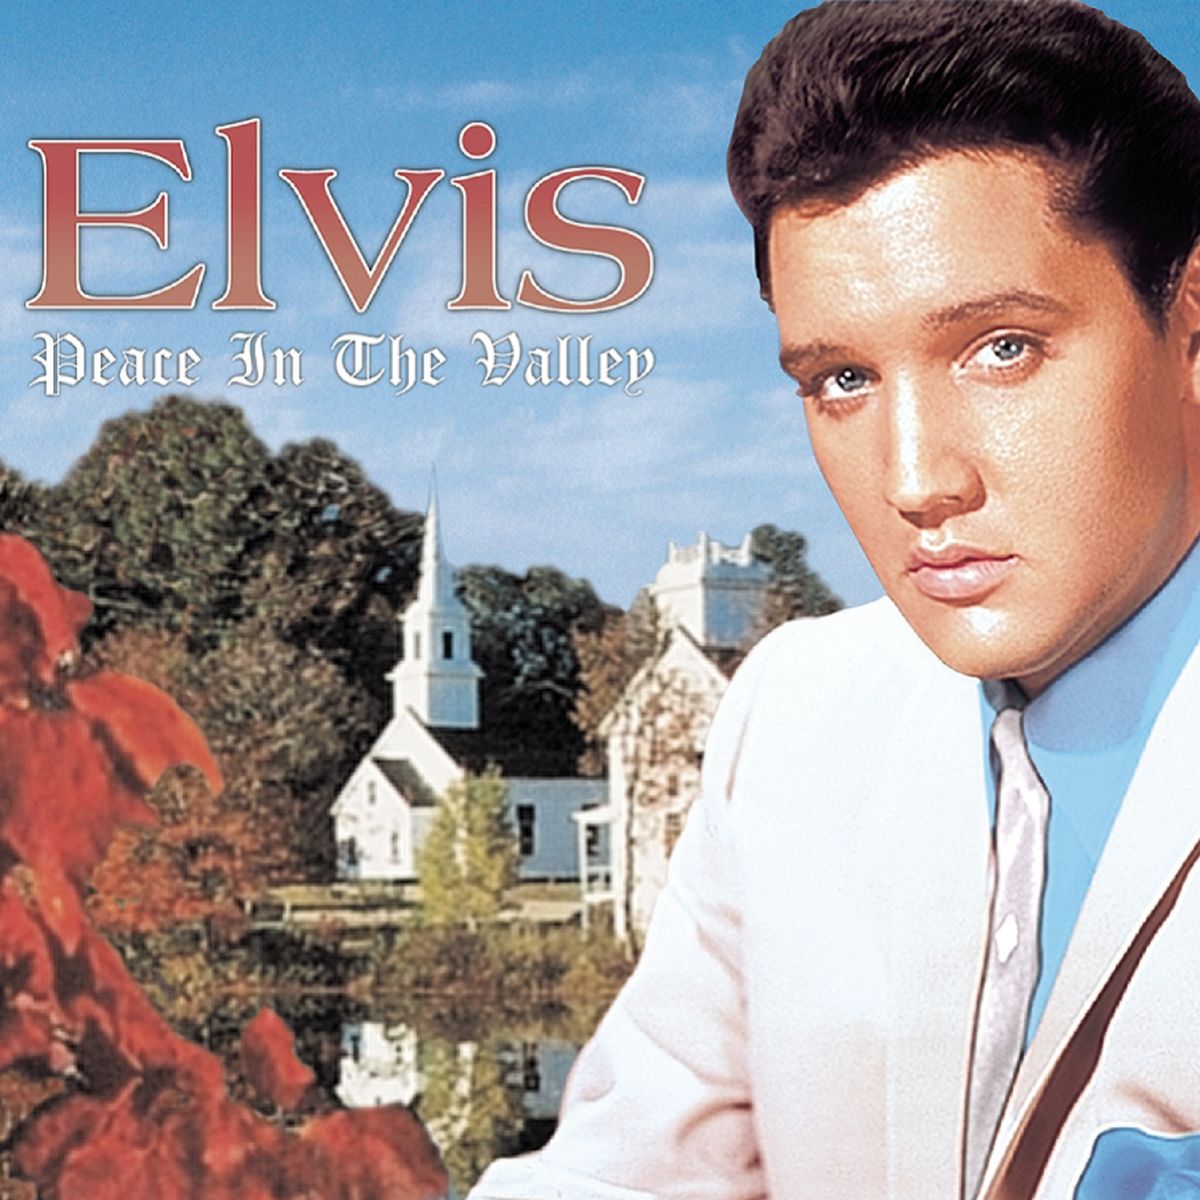 Elvis Presley – Peace in the Valley